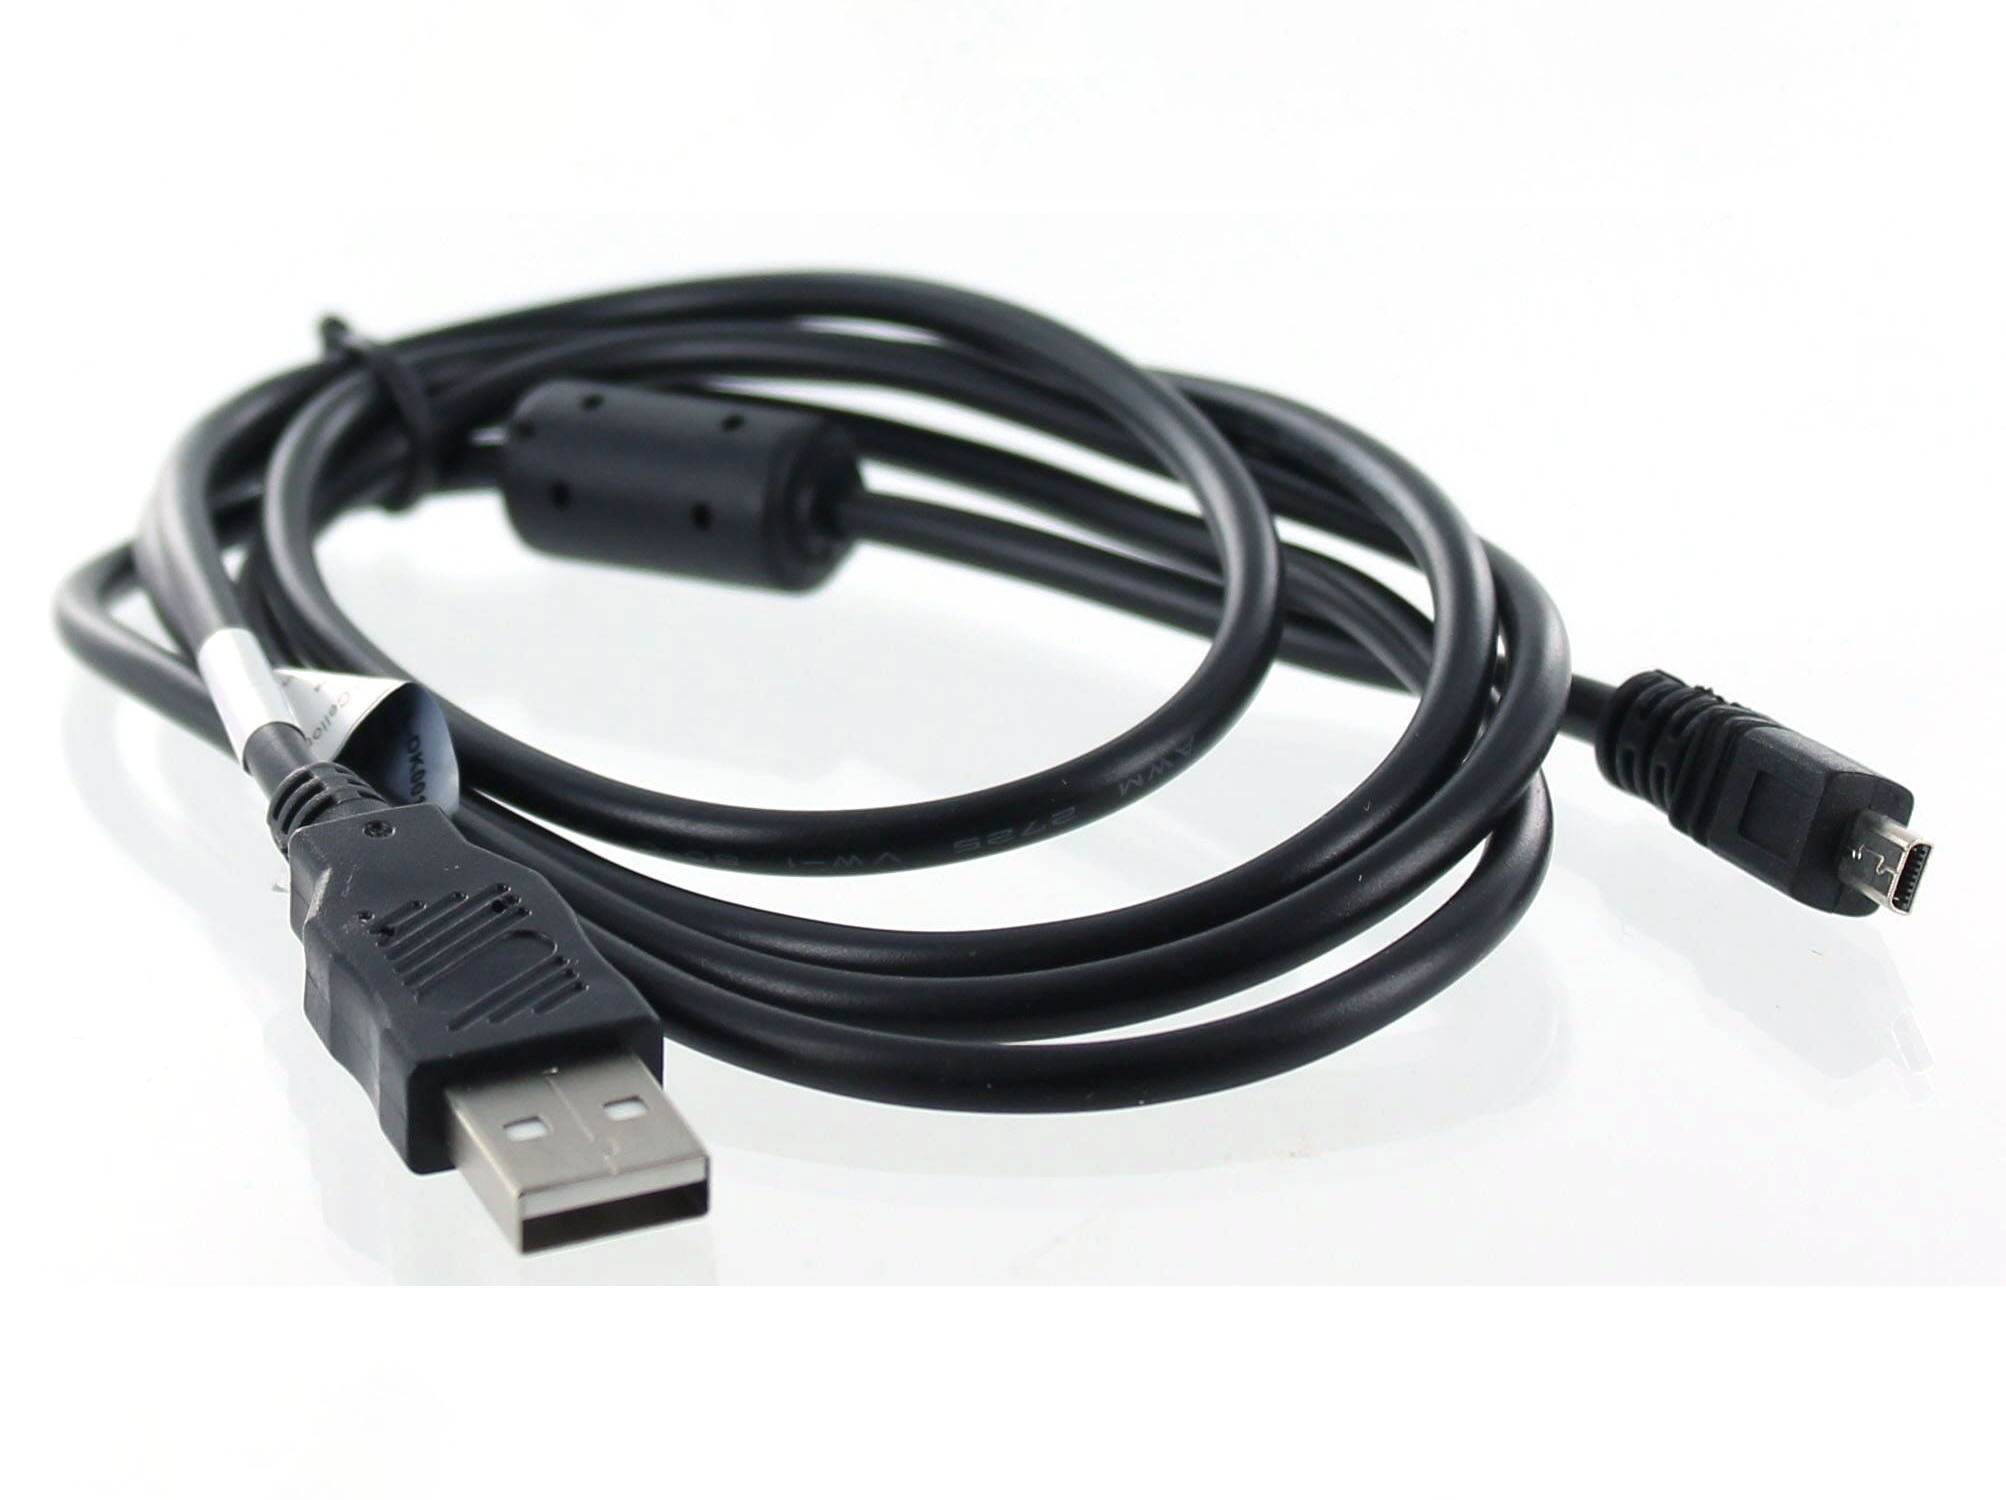 MOBILOTEC USB-Datenkabel S6400 Coolpix Nikon, schwarz Zubehör mit Nikon kompatibel